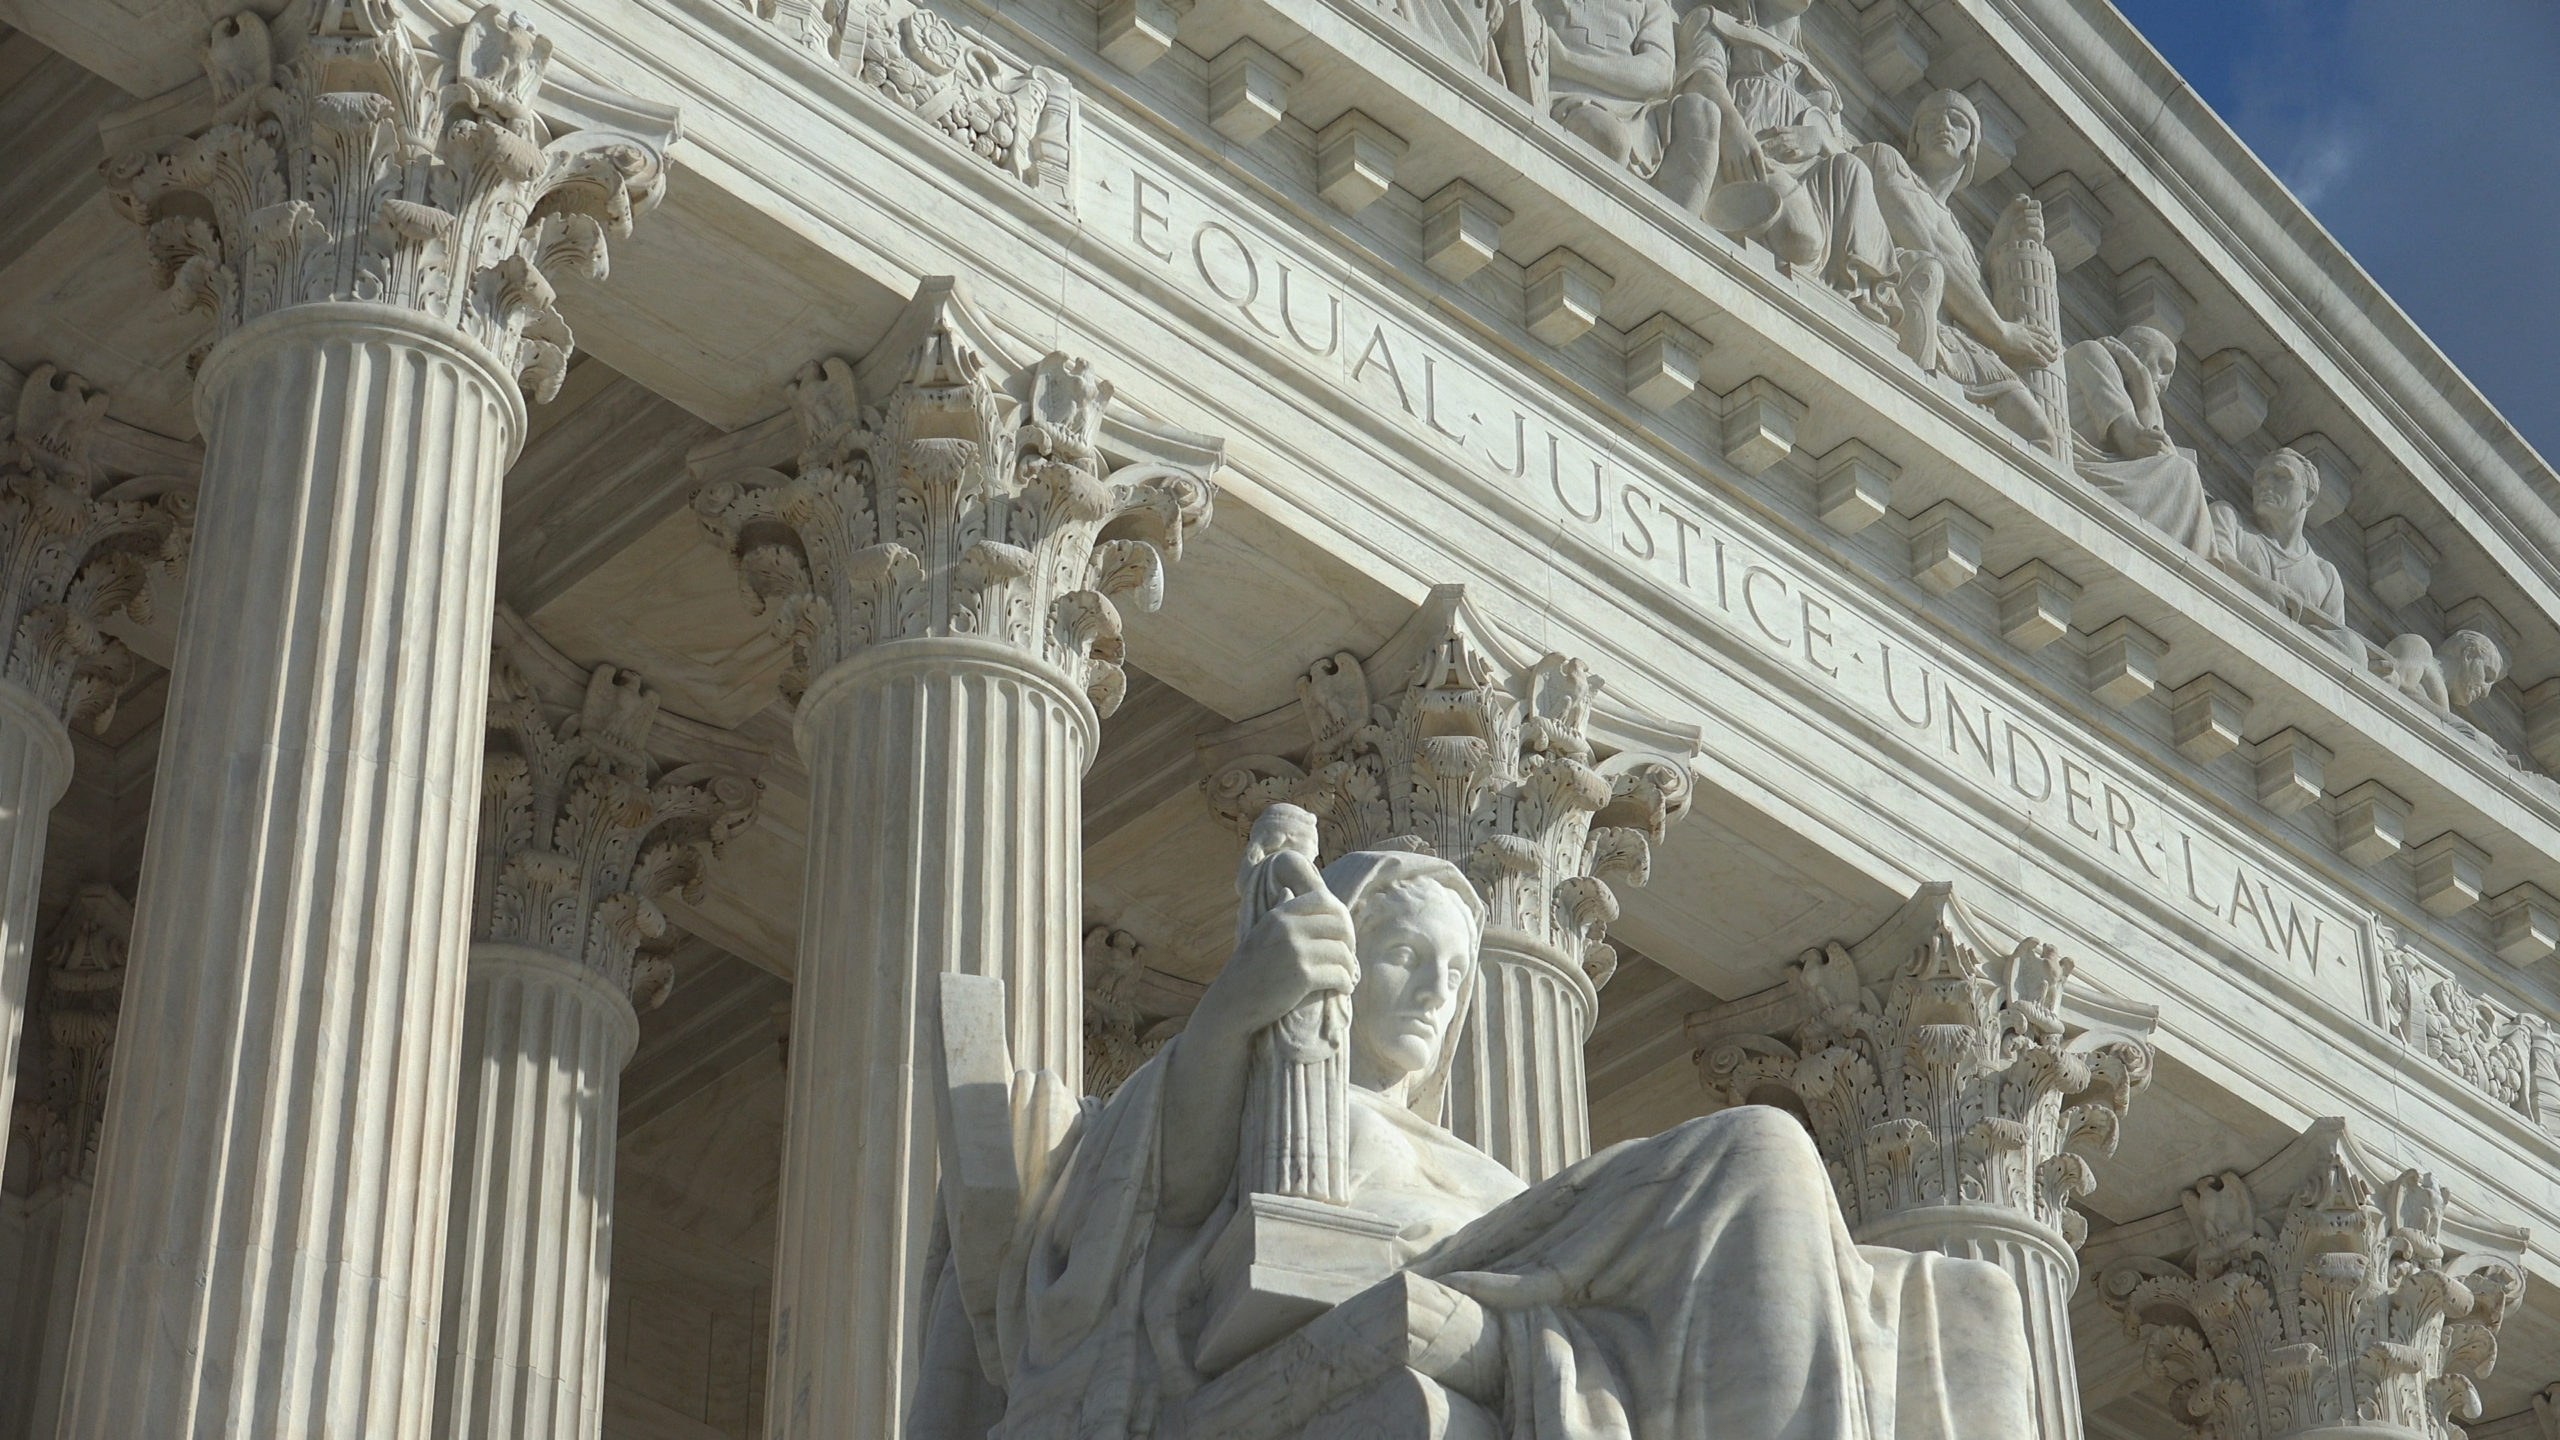 Equal Justice Under Law engraving above entrance to US Supreme Court Building